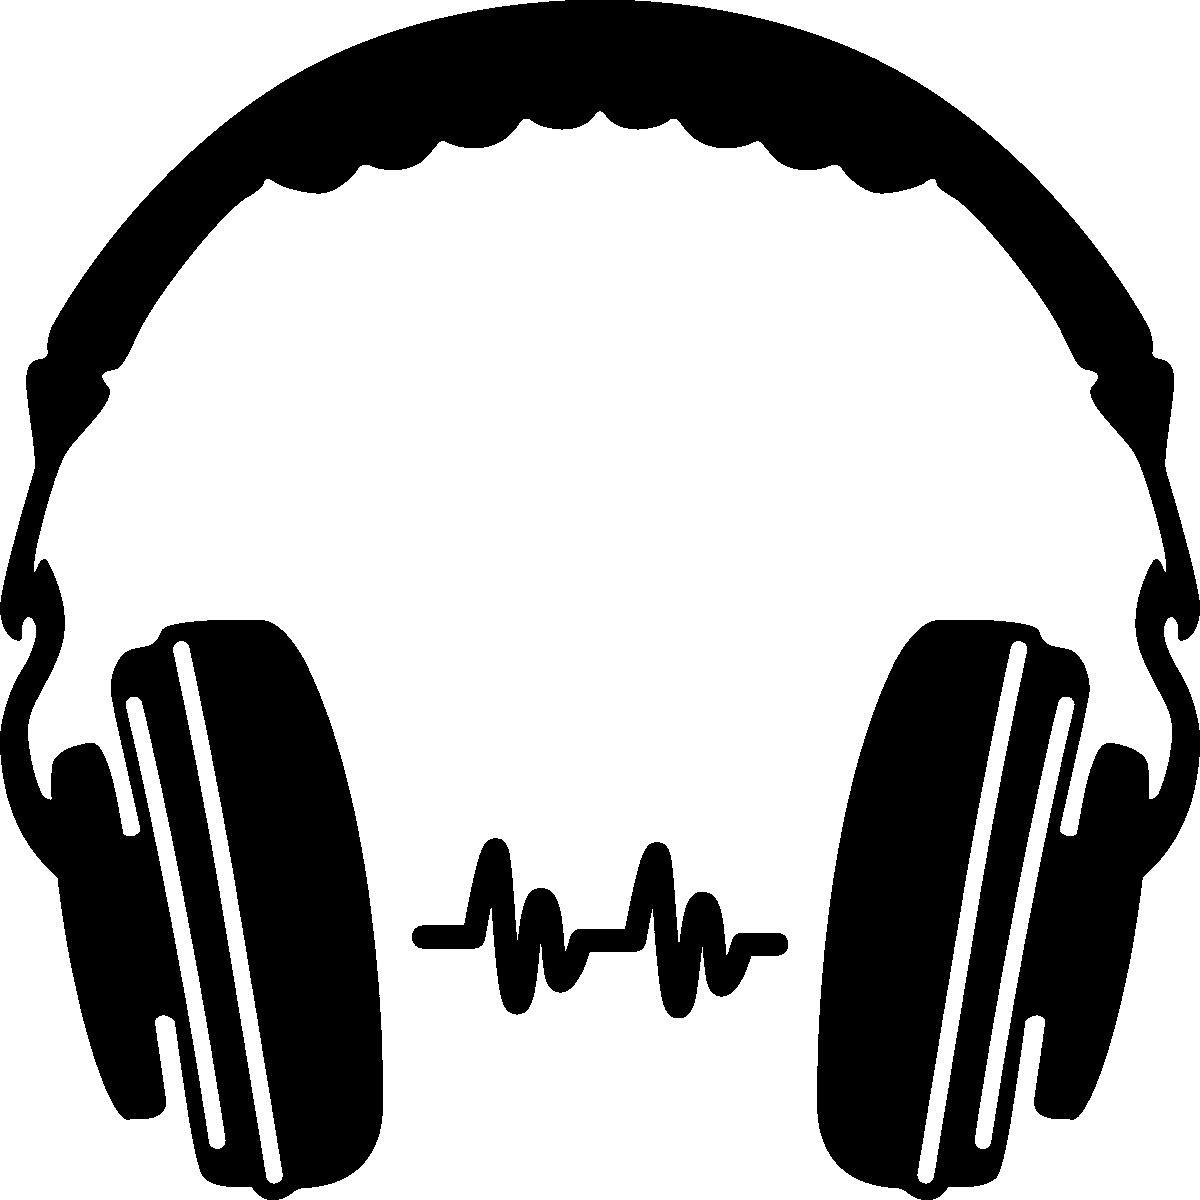 Download PNG image - Headphones PNG Transparent Image 